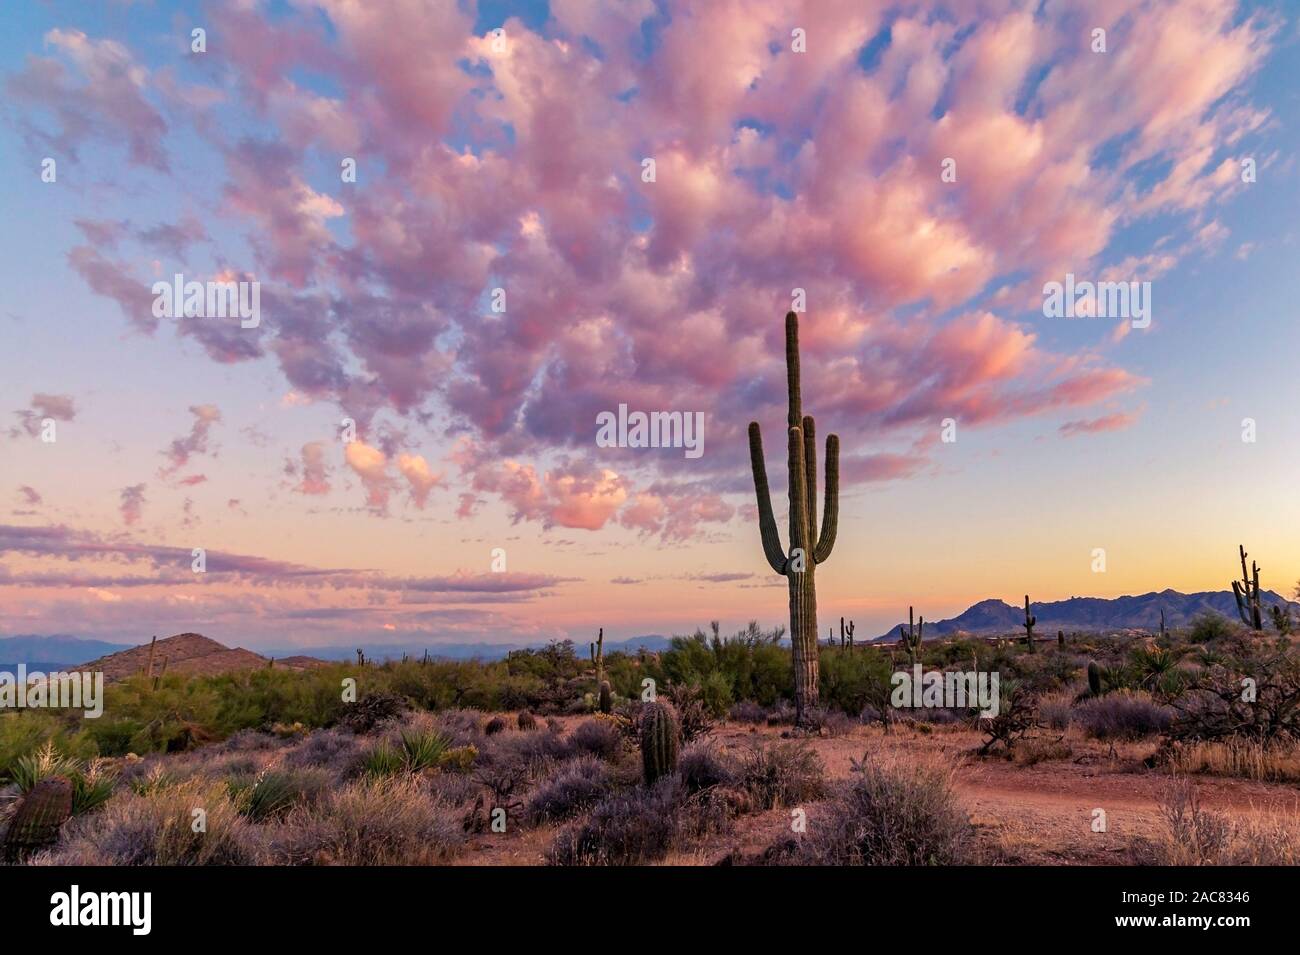 Ein einsamer Saguaro Kaktus mit Sonnenuntergang Himmel in Scottsdale, Arizona Stockfoto